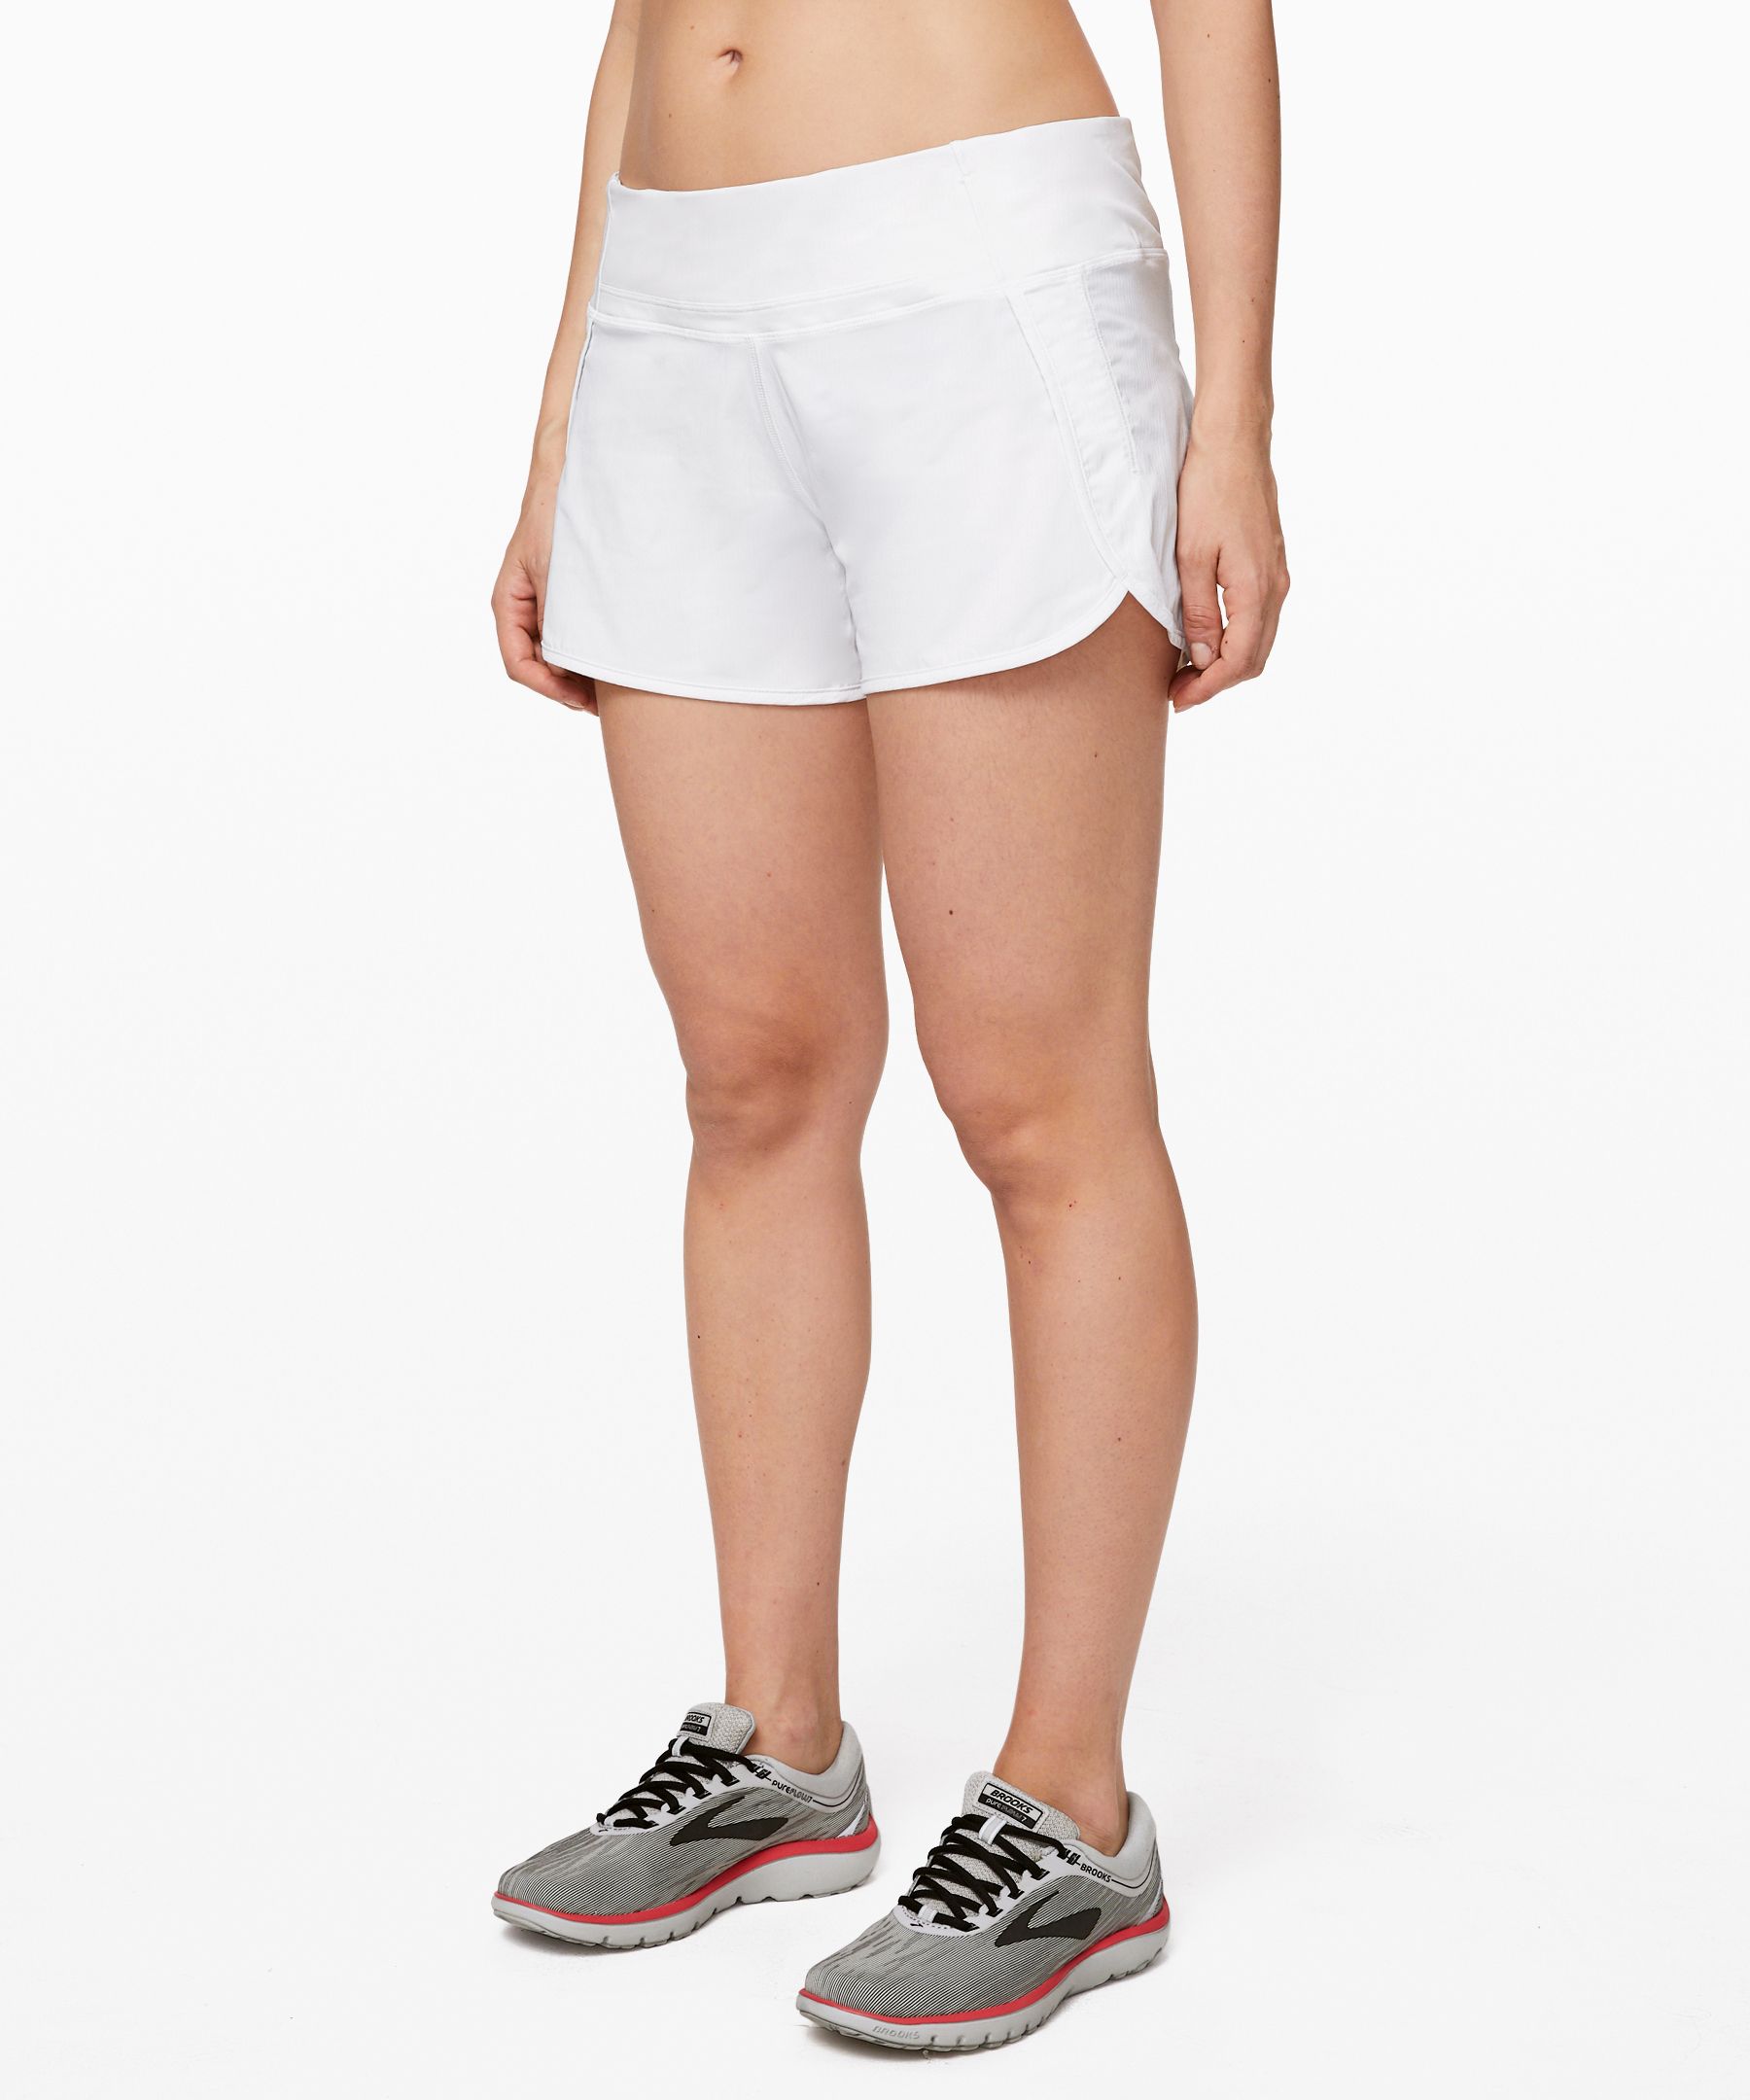 lululemon white running shorts